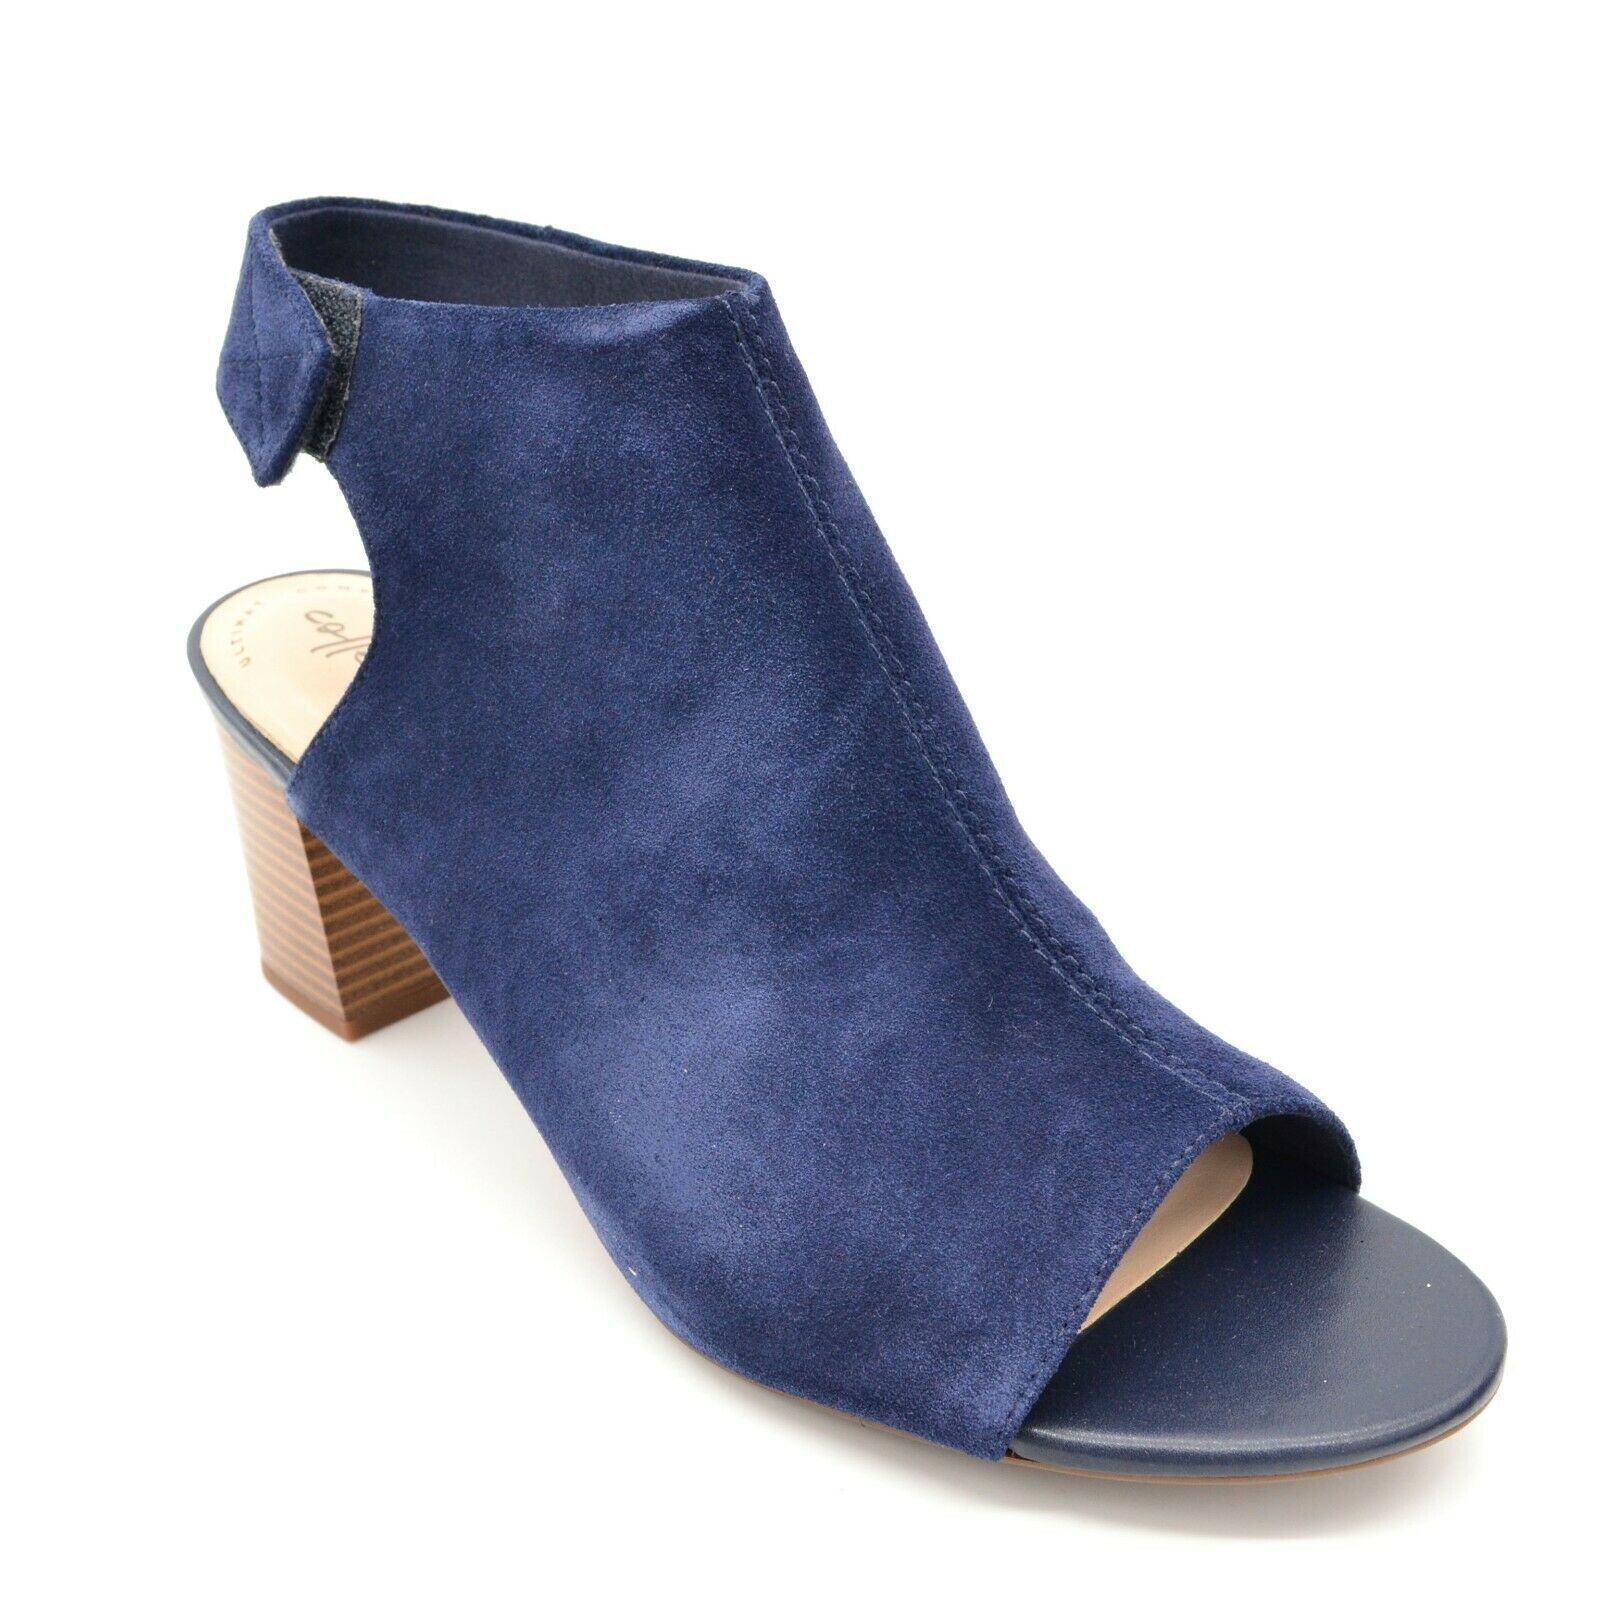 clarks blue suede sandals